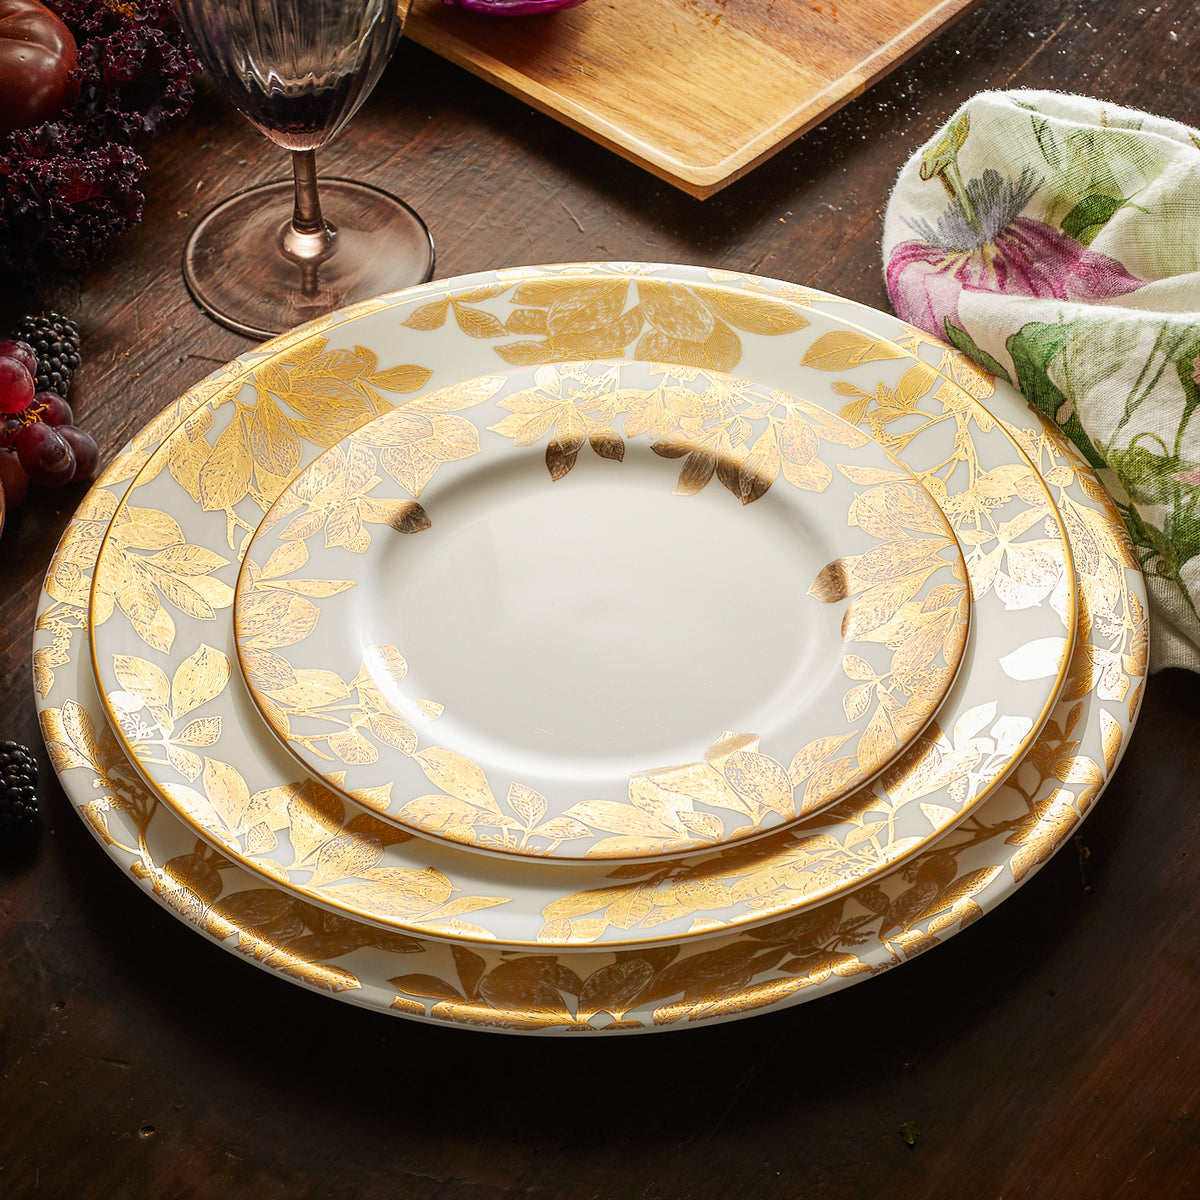 A set of gold and white Arbor Rimmed Salad Plates Gold by Caskata Artisanal Home, dishwasher safe.